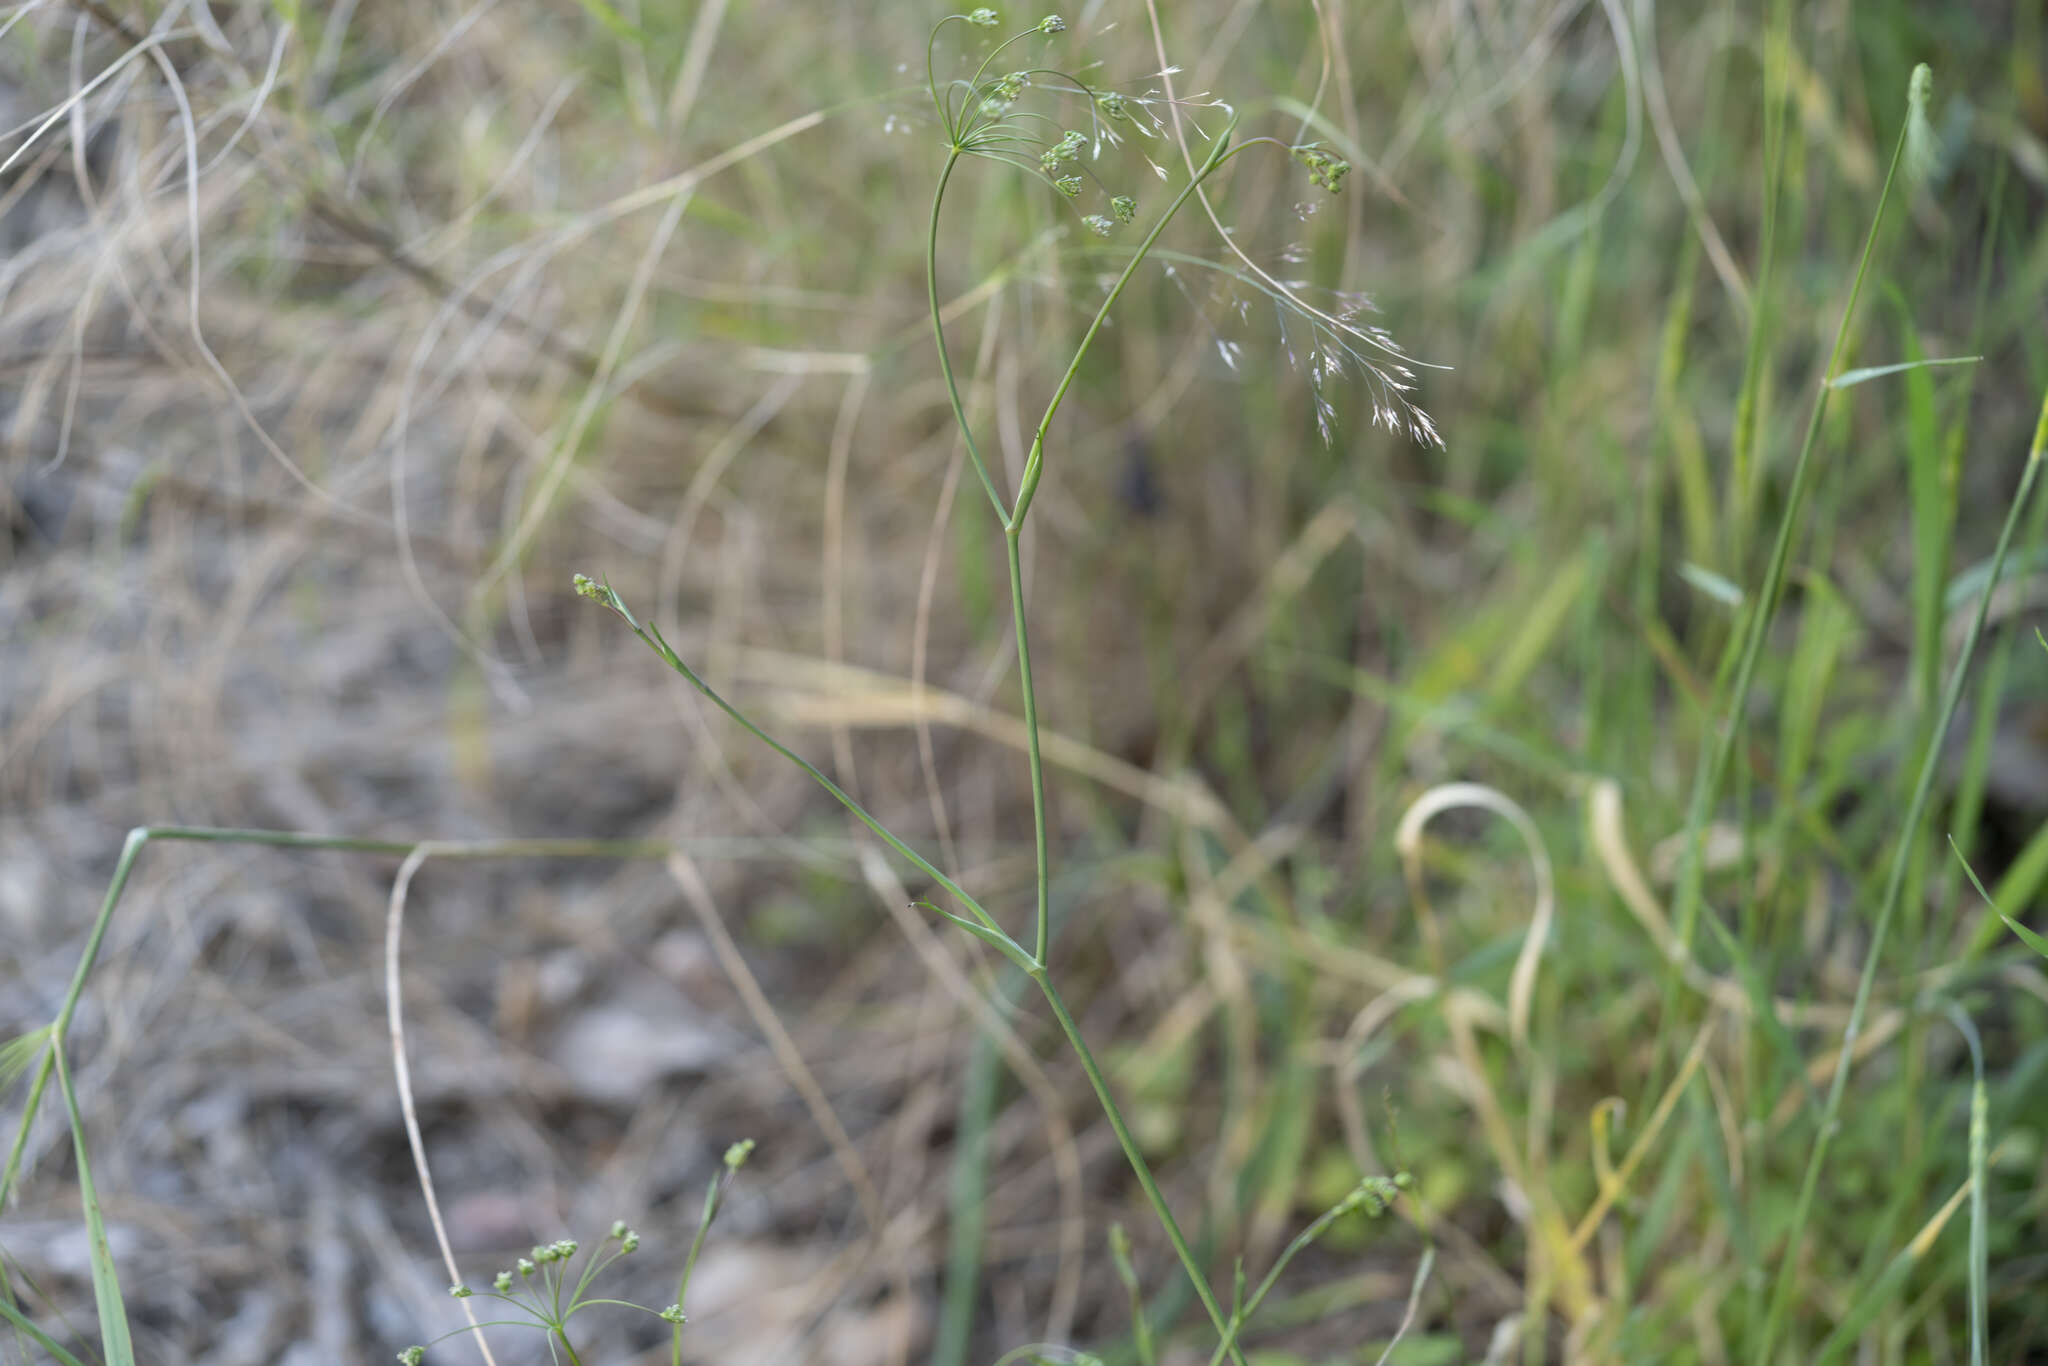 Image of Scaligeria napiformis (Willd. ex Spreng.) Grande